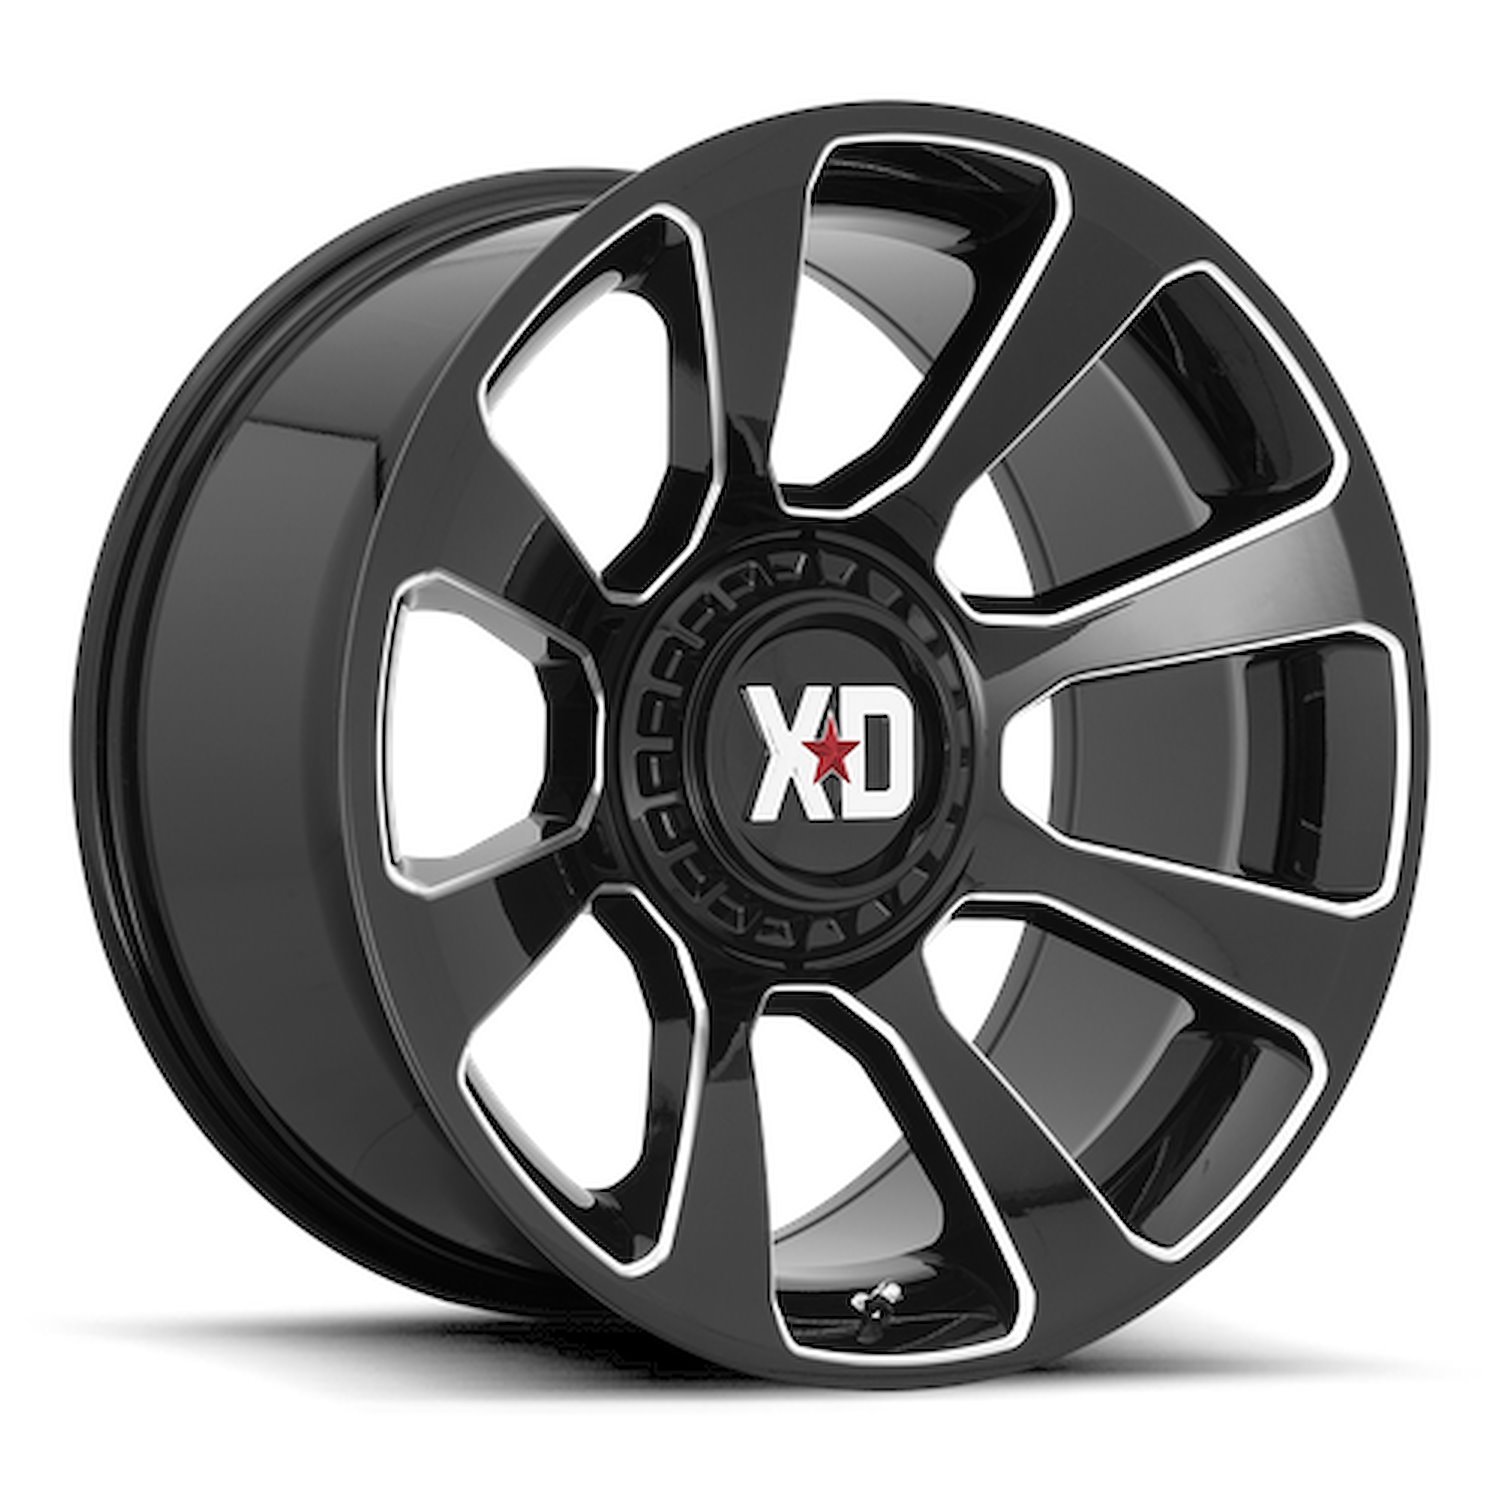 XD Wheels XD854 Reactor Wheel [Size: 20" x 10"] Gloss Black w/ Milled Accents